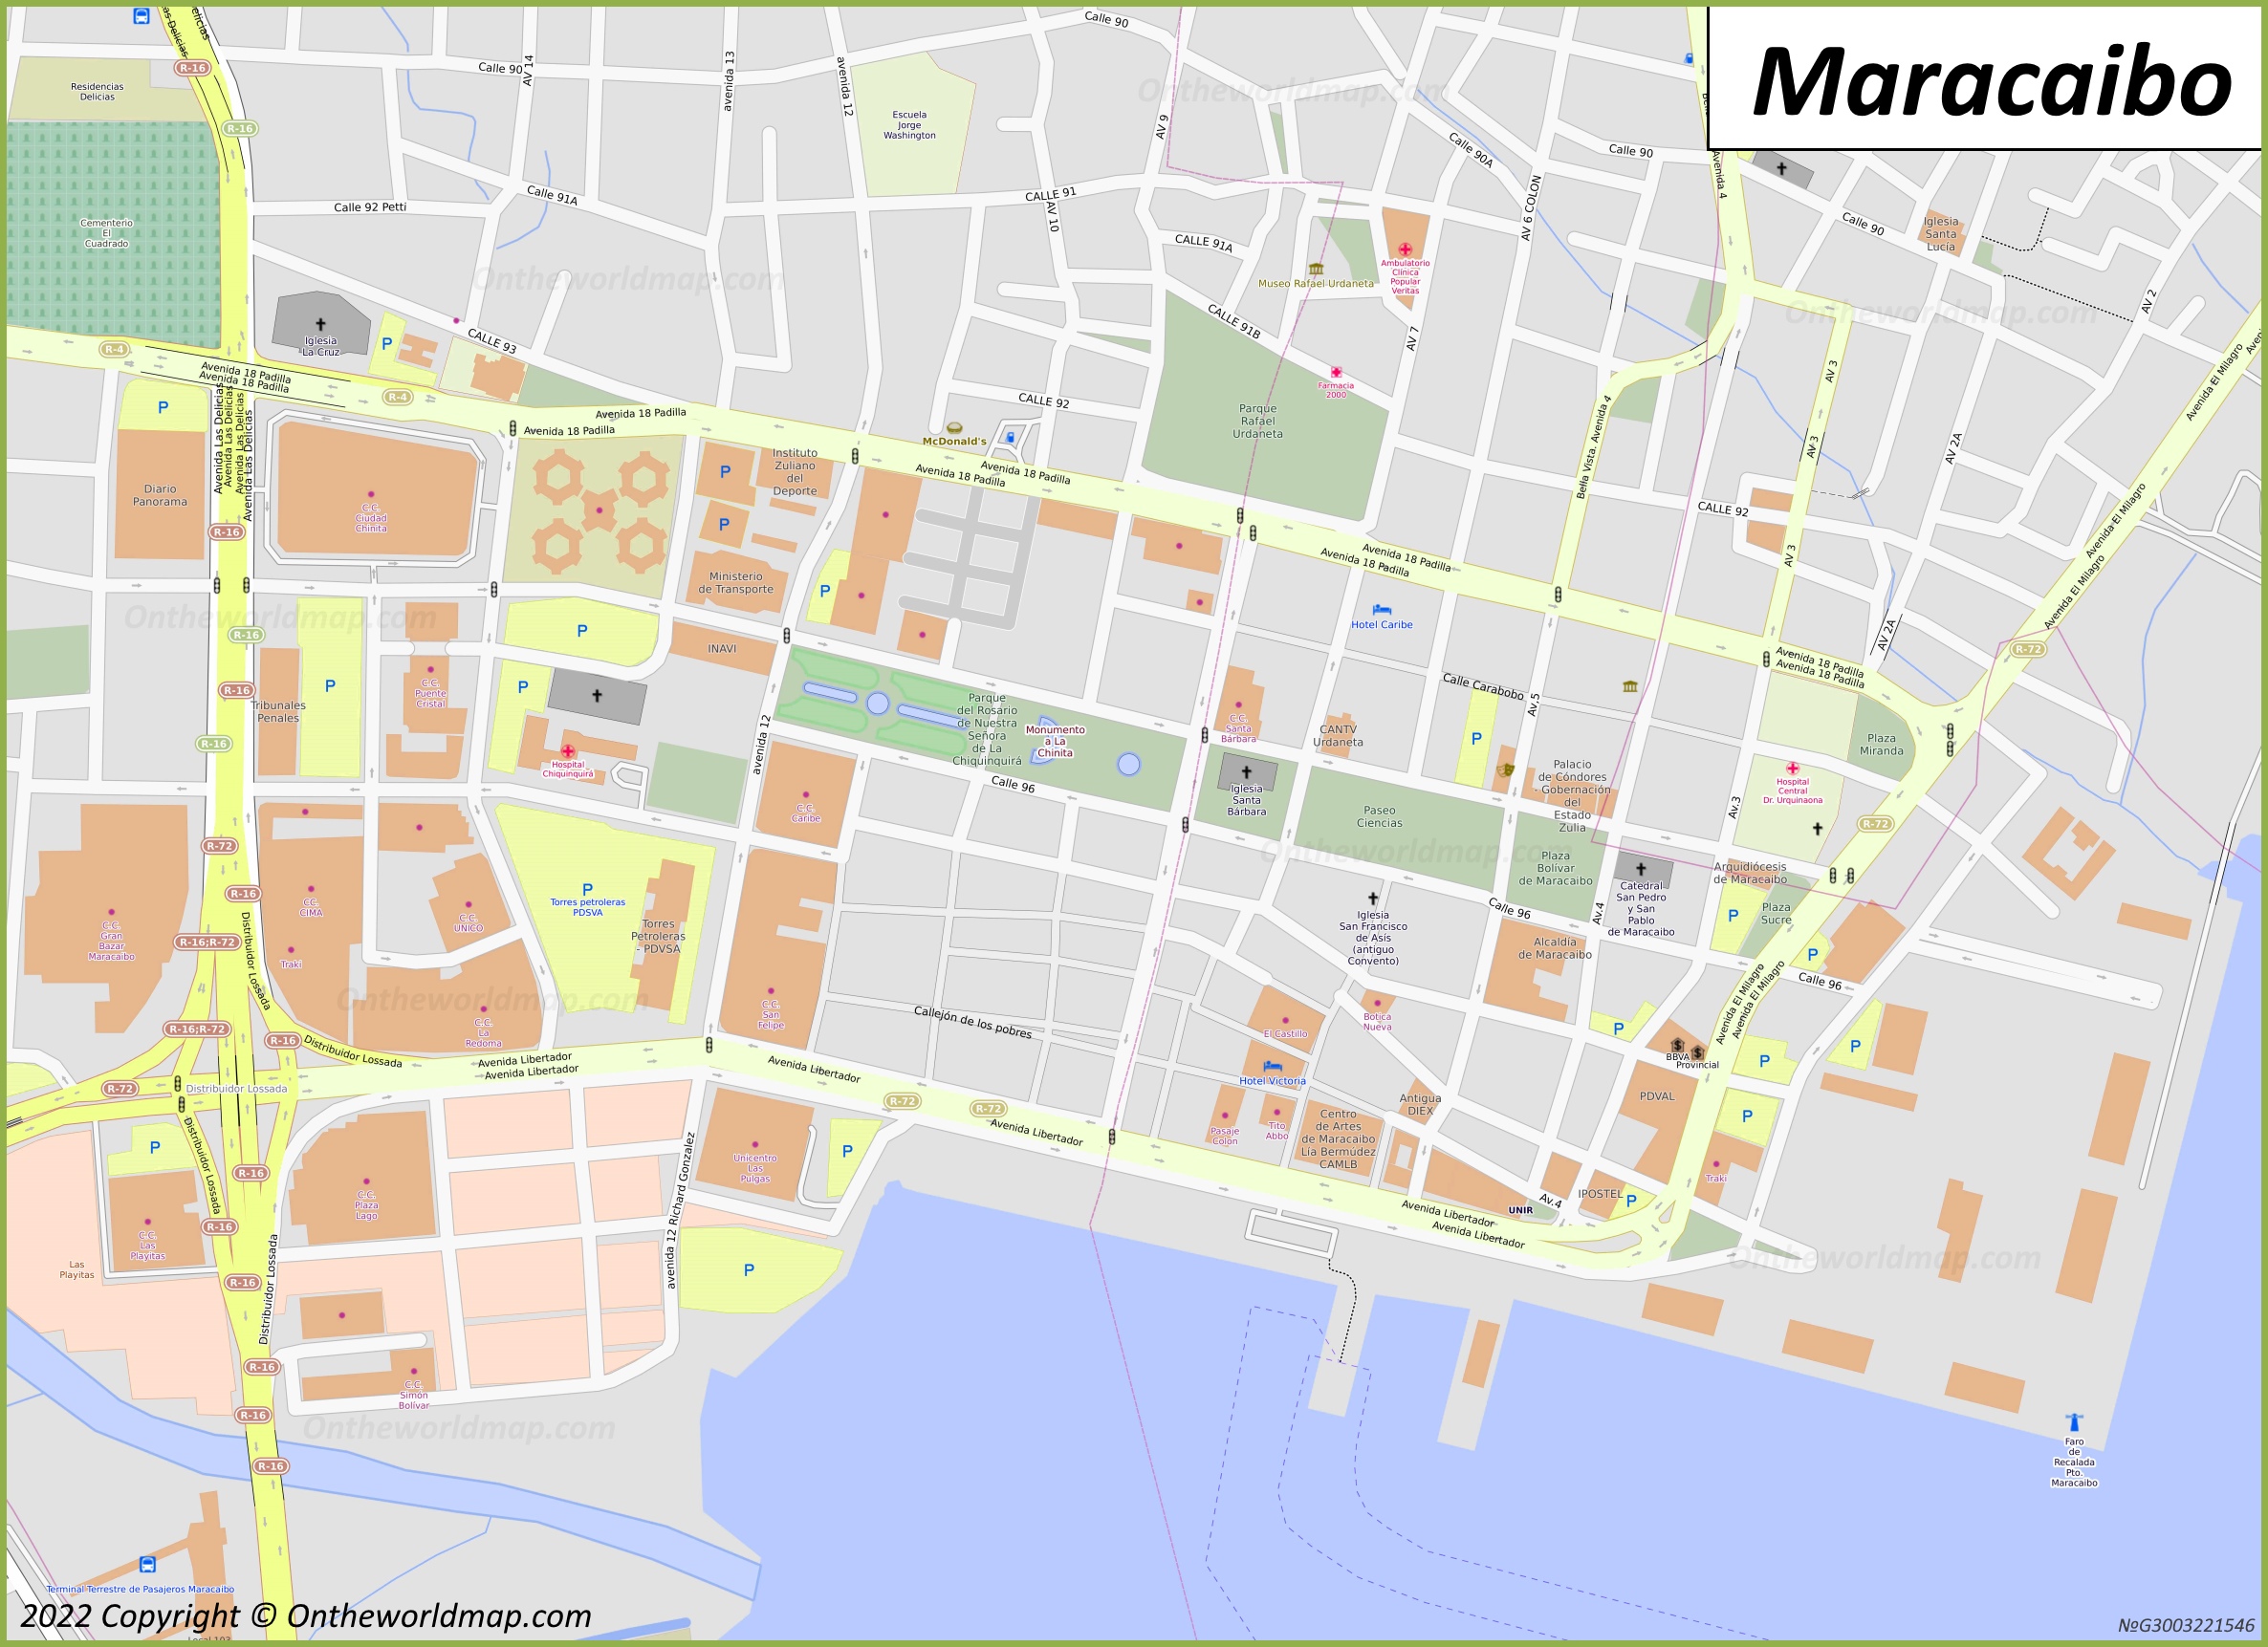 Maracaibo City Centre Map